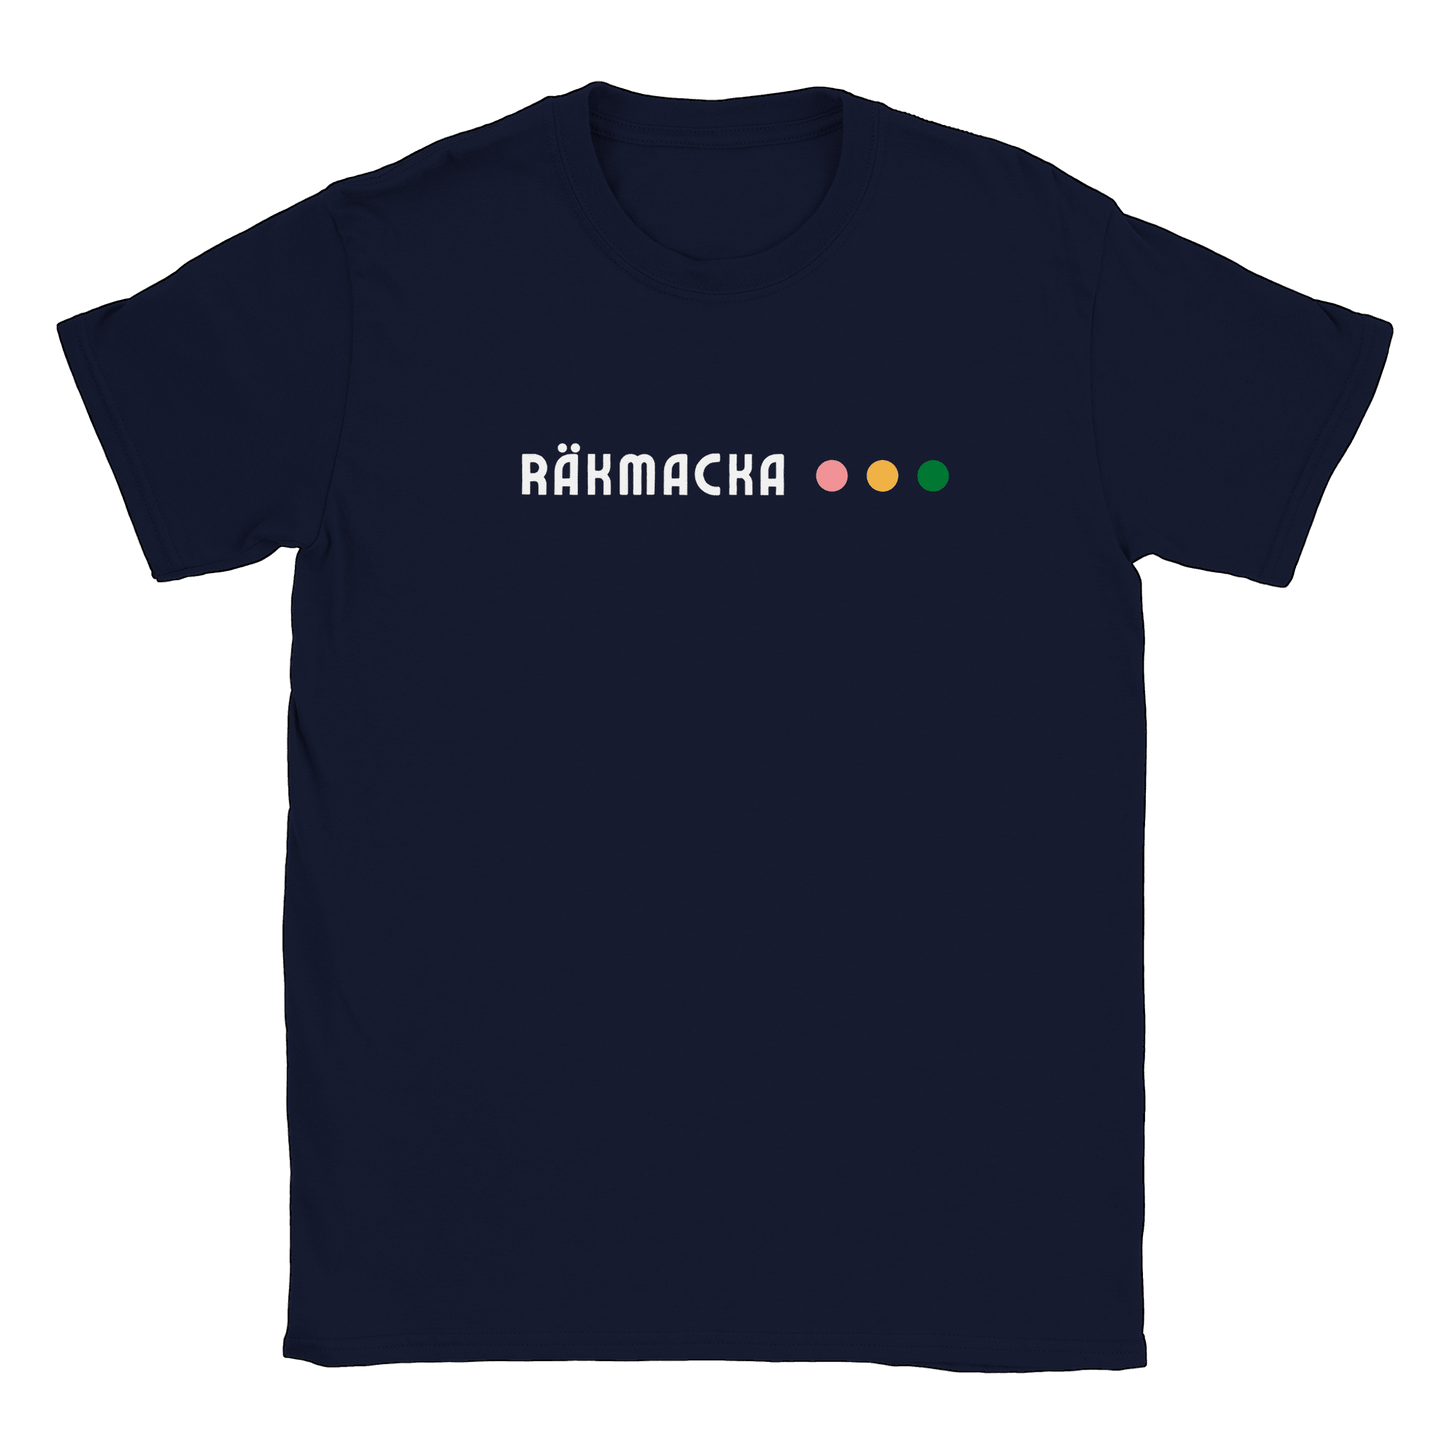 Räkmacka - T-shirt Marinblå